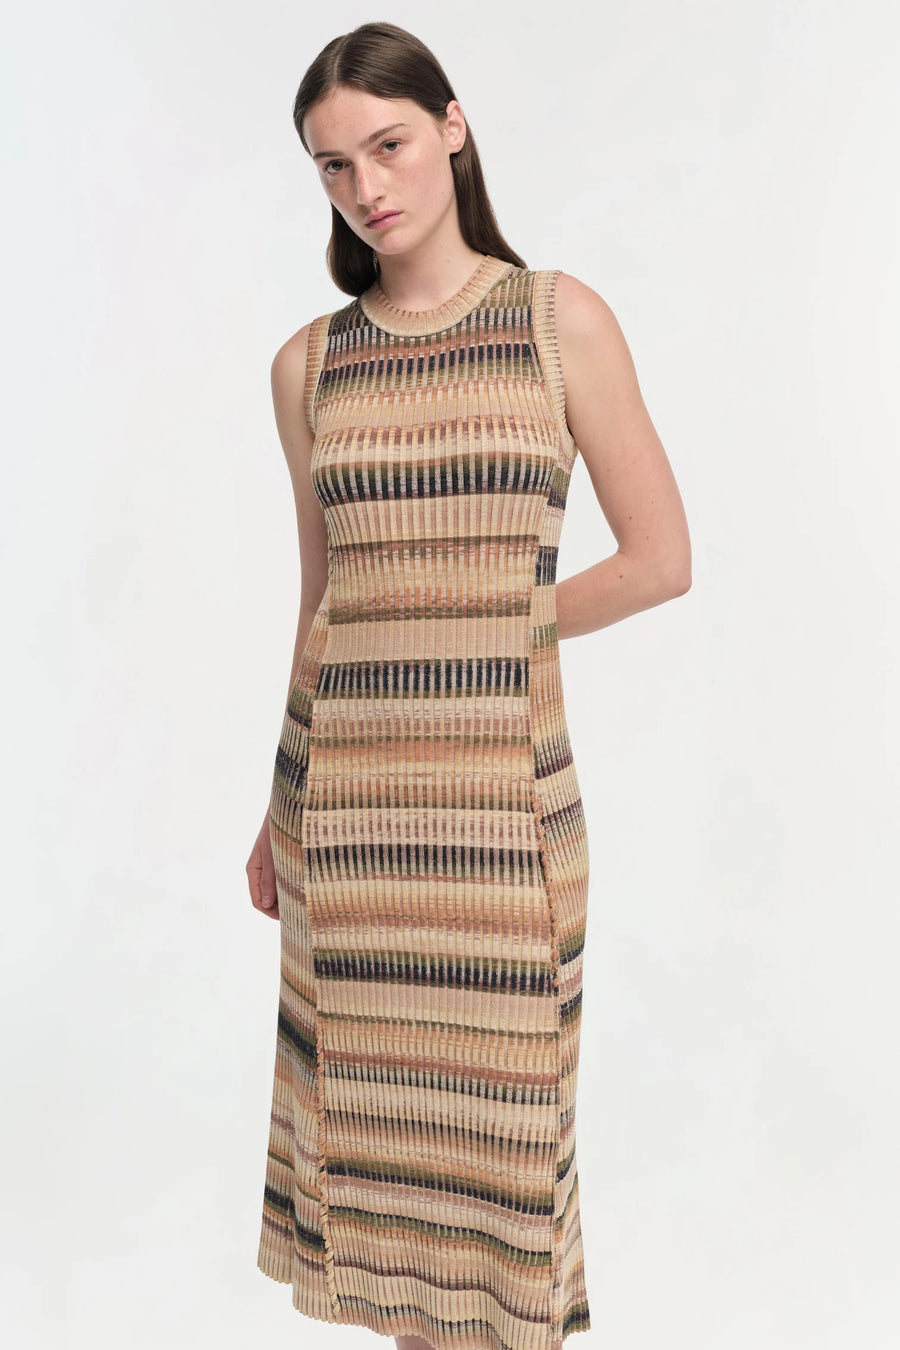 SIMKHAI Fairfax Sleeveless Dress